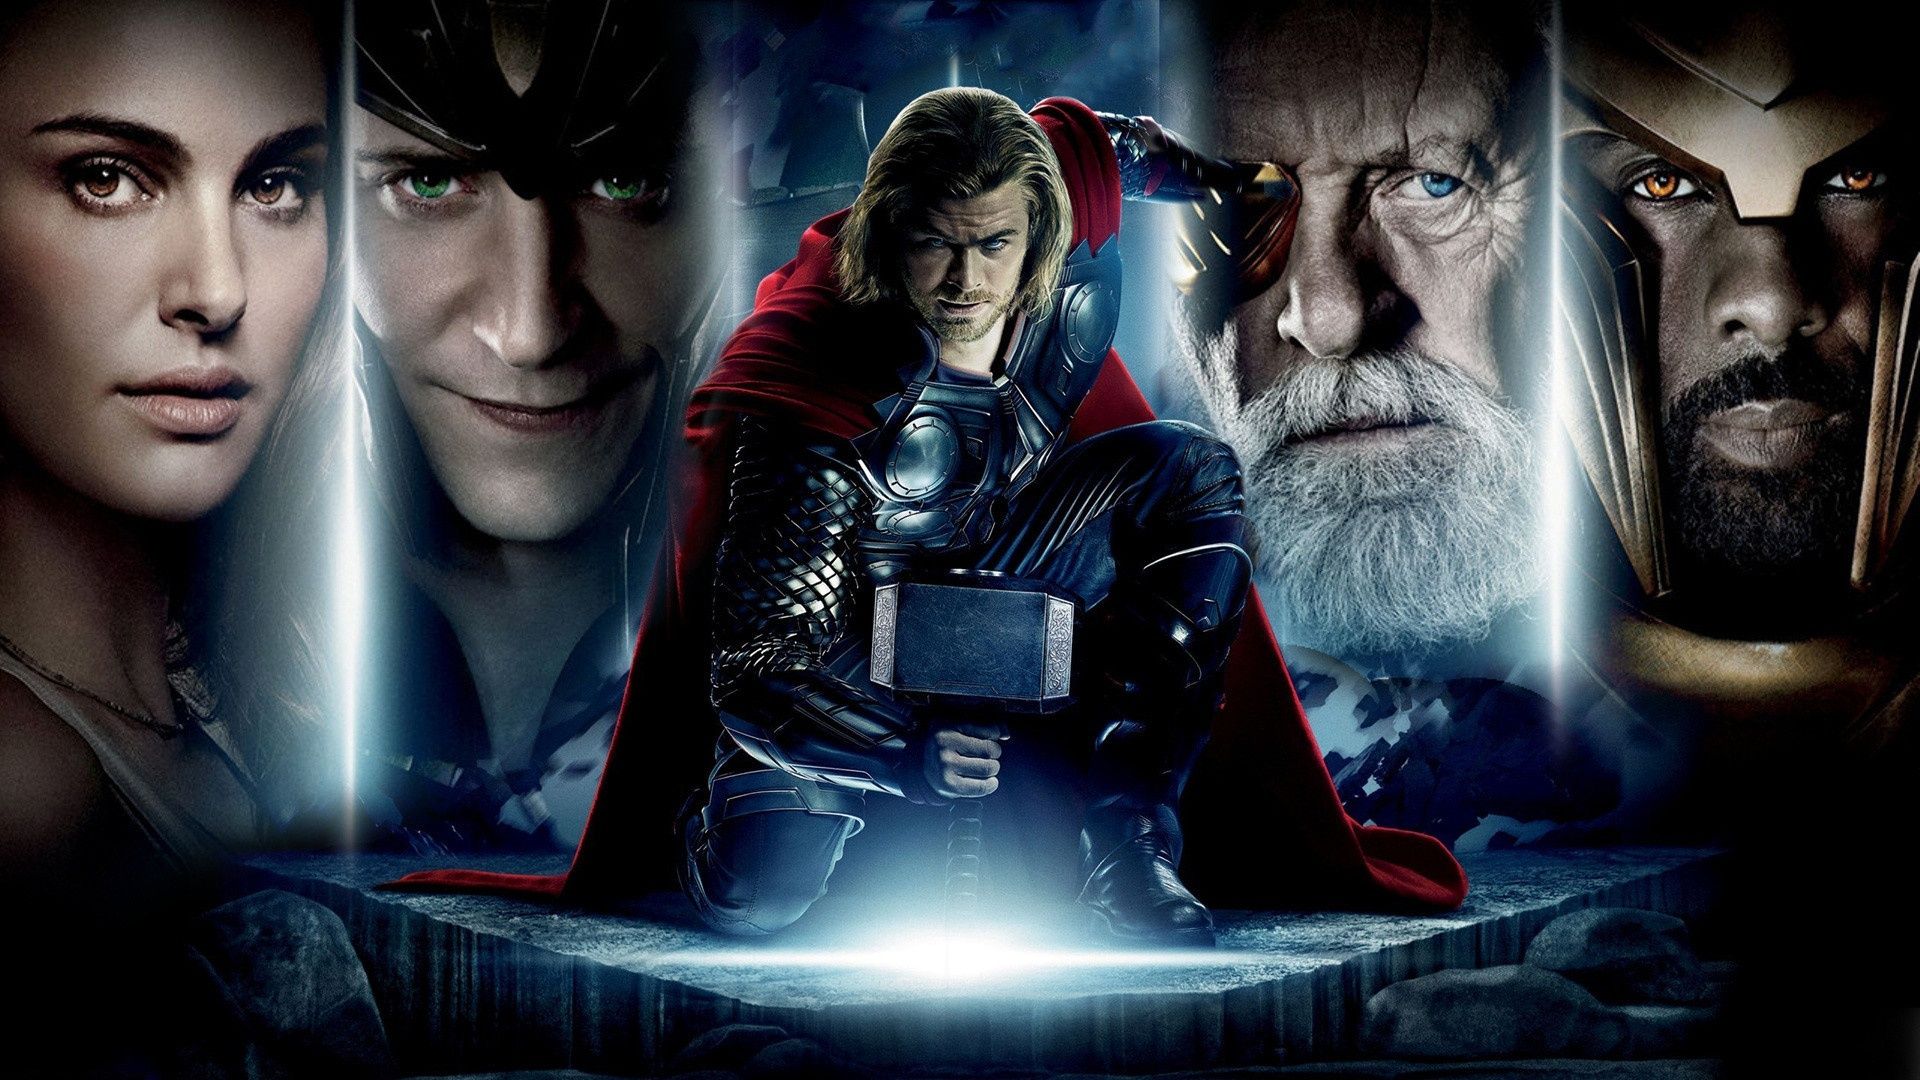 Thor Movie poster